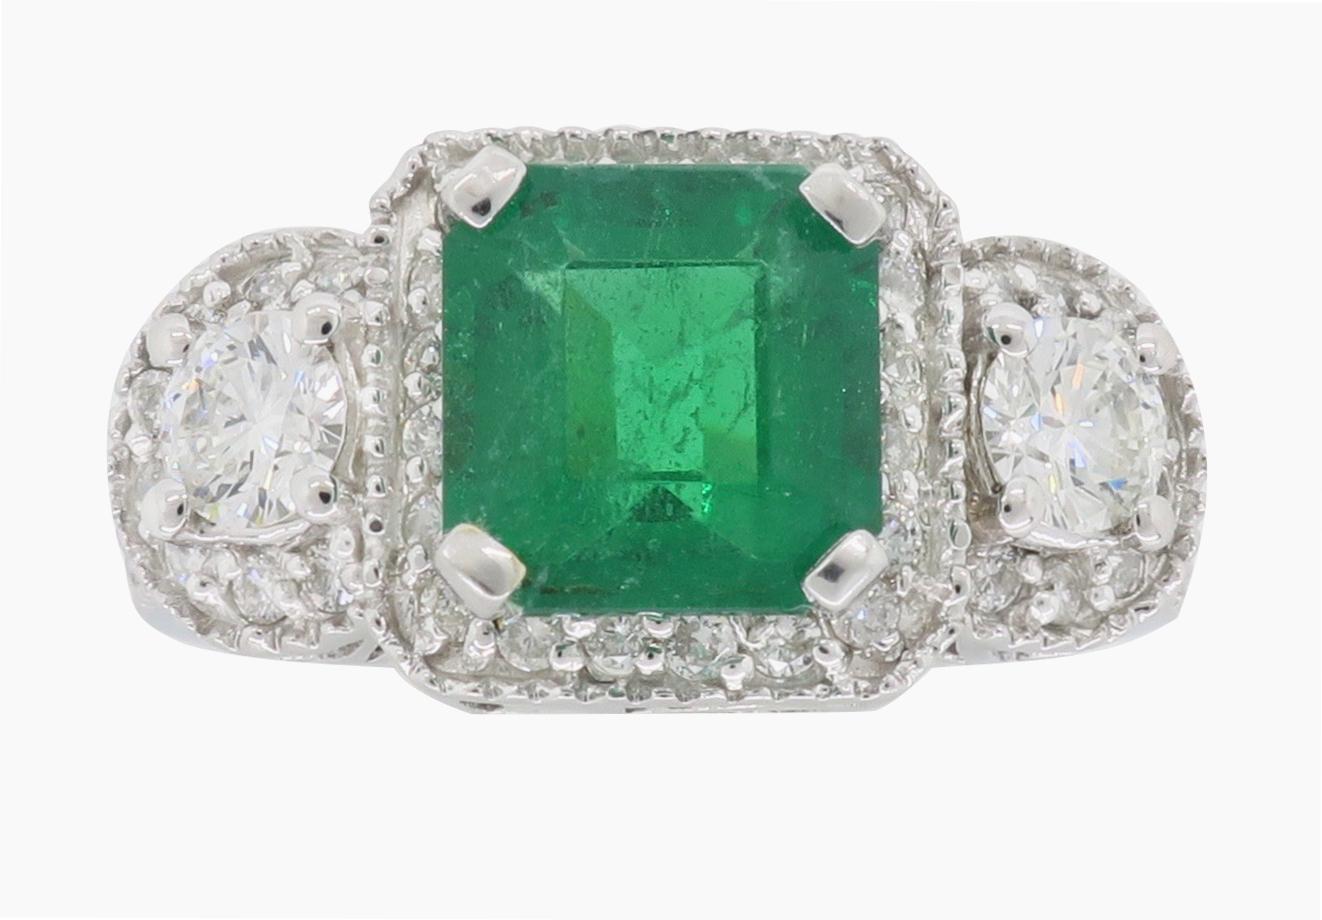 Asscher Cut Emerald and Diamond cocktail ring set in 14K white gold.

Gemstone: Emerald & Diamond
Gemstone Carat Weight: Approximately 2.35CT Asscher Cut Emerald 
Diamond Carat Weight: Approximately Approximately 1.09CTW
Diamond Cut: Round